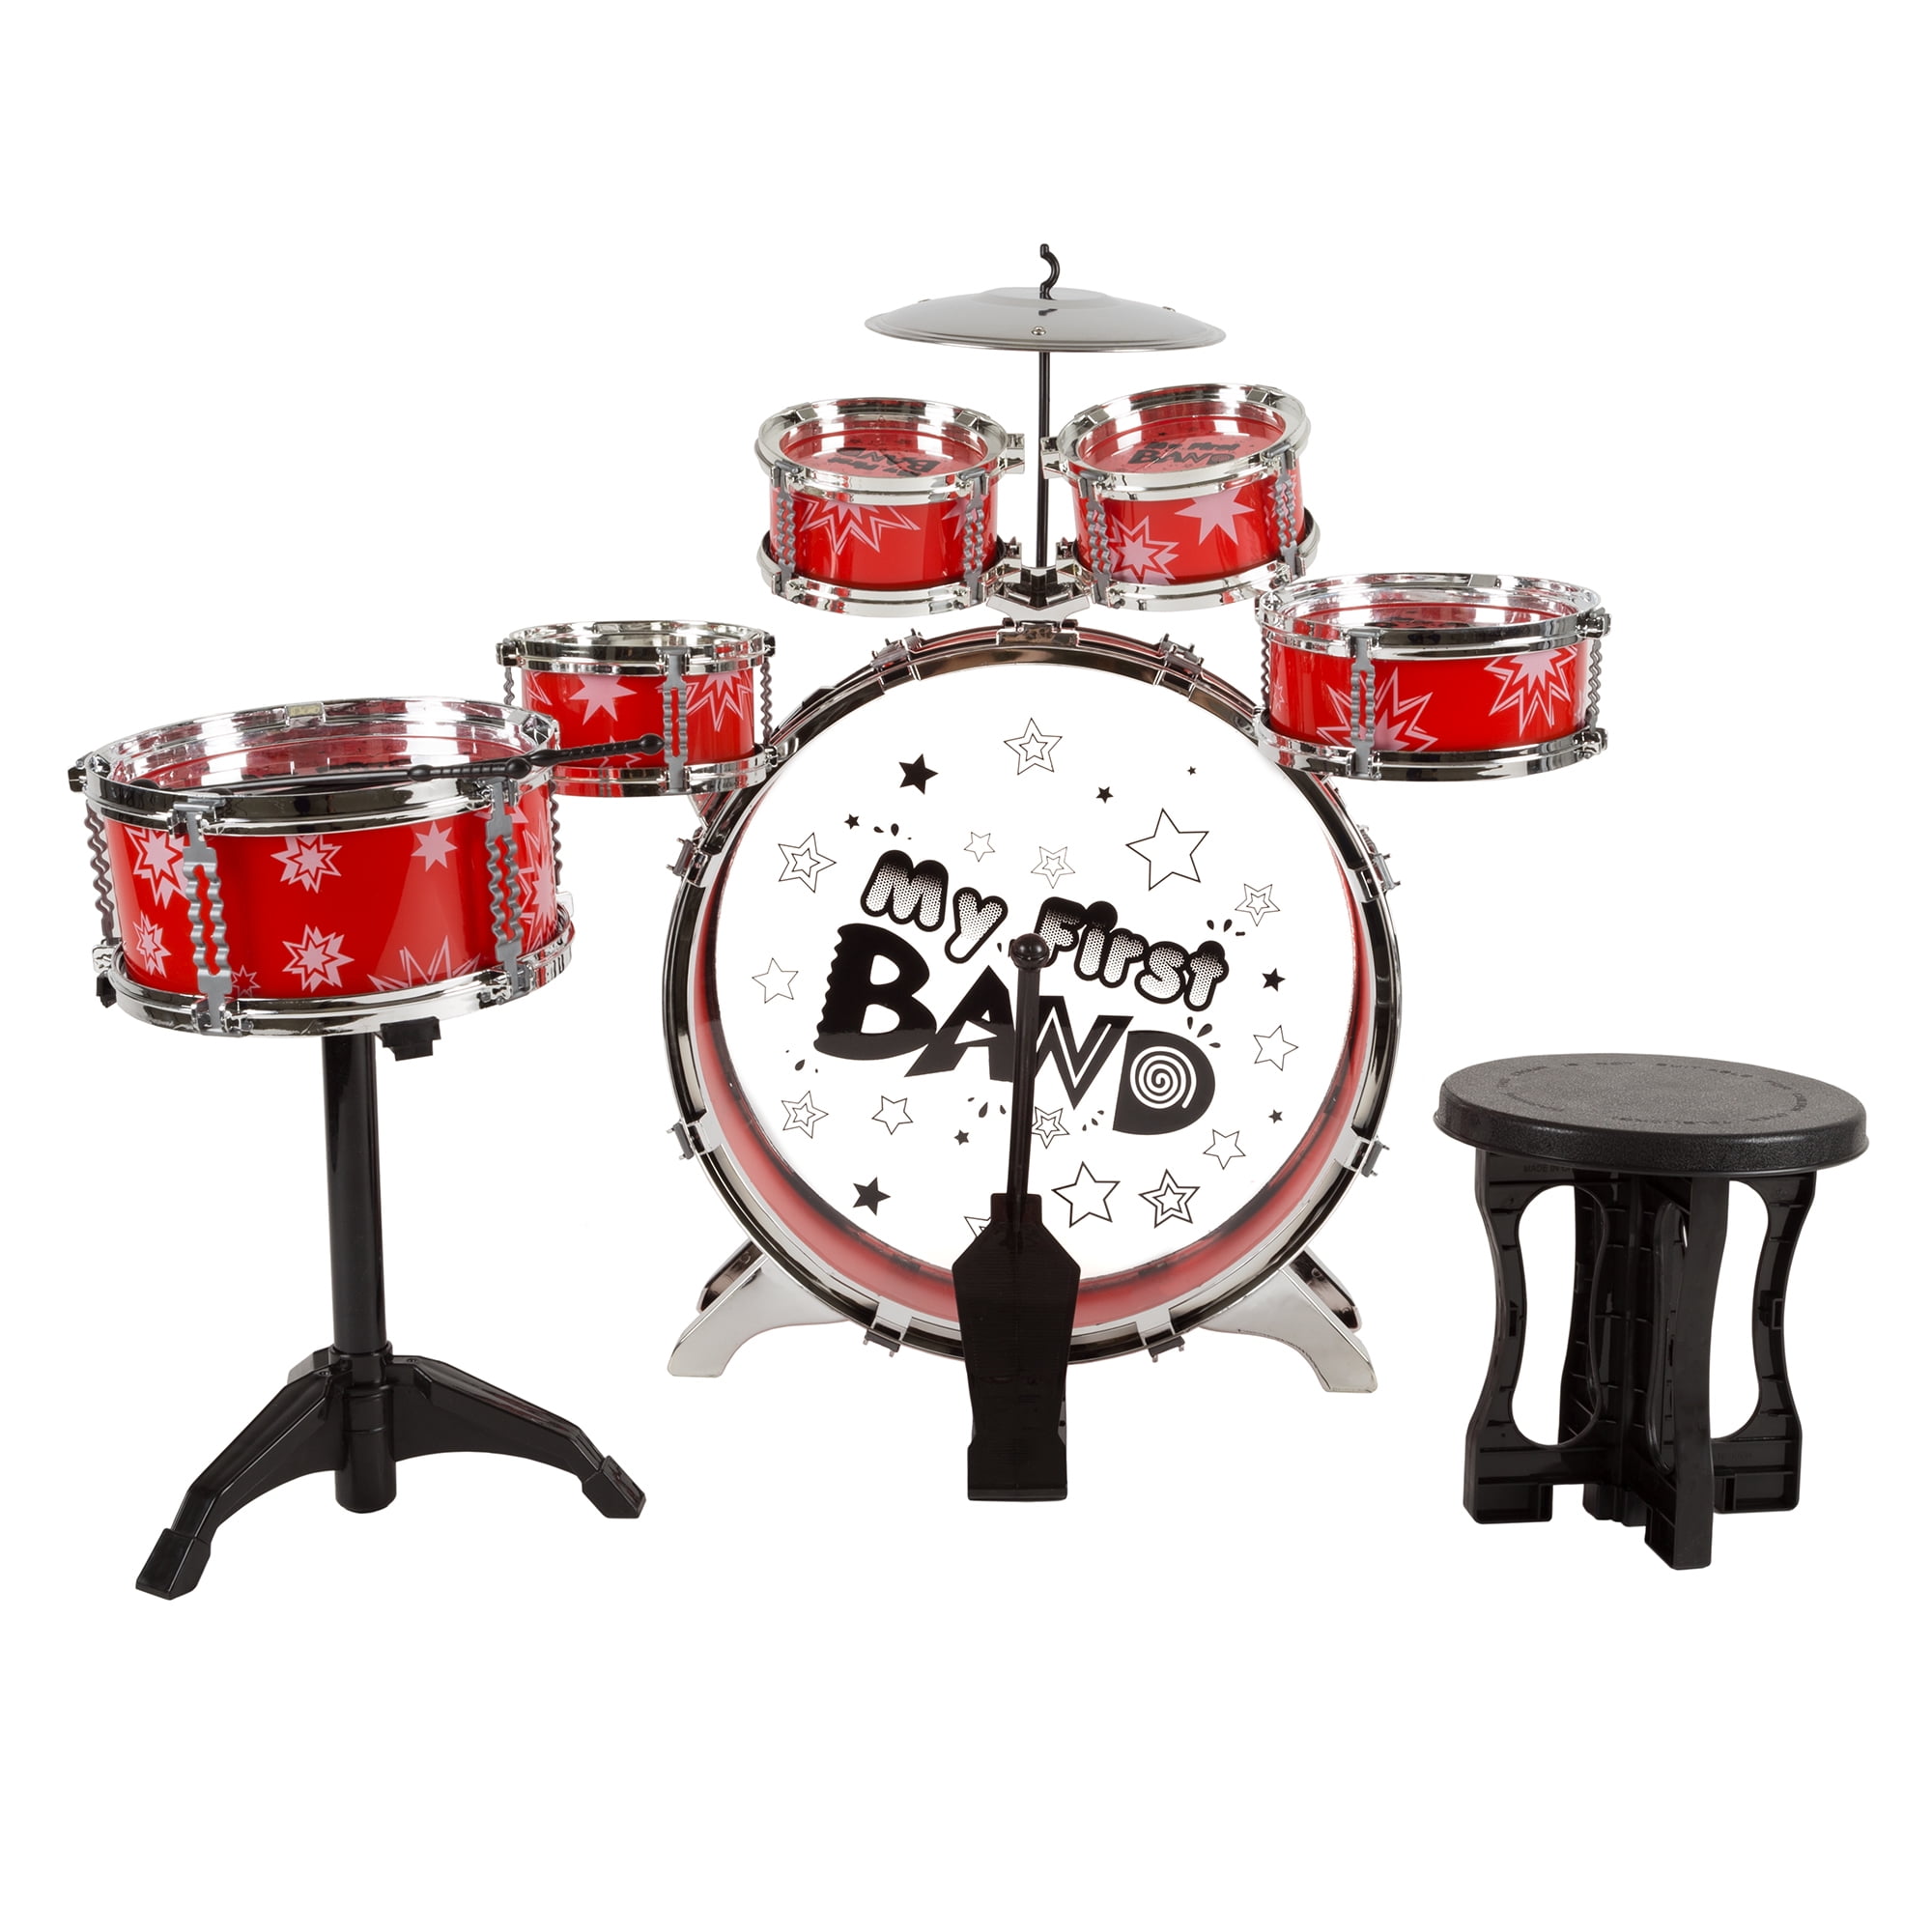 leegoal Kids Jazz Drum 5 Drums Toy Drum Set Childrens Drum Set Kit with Stool Drum for Kids Musical Instrument Toy Birthday Gift 